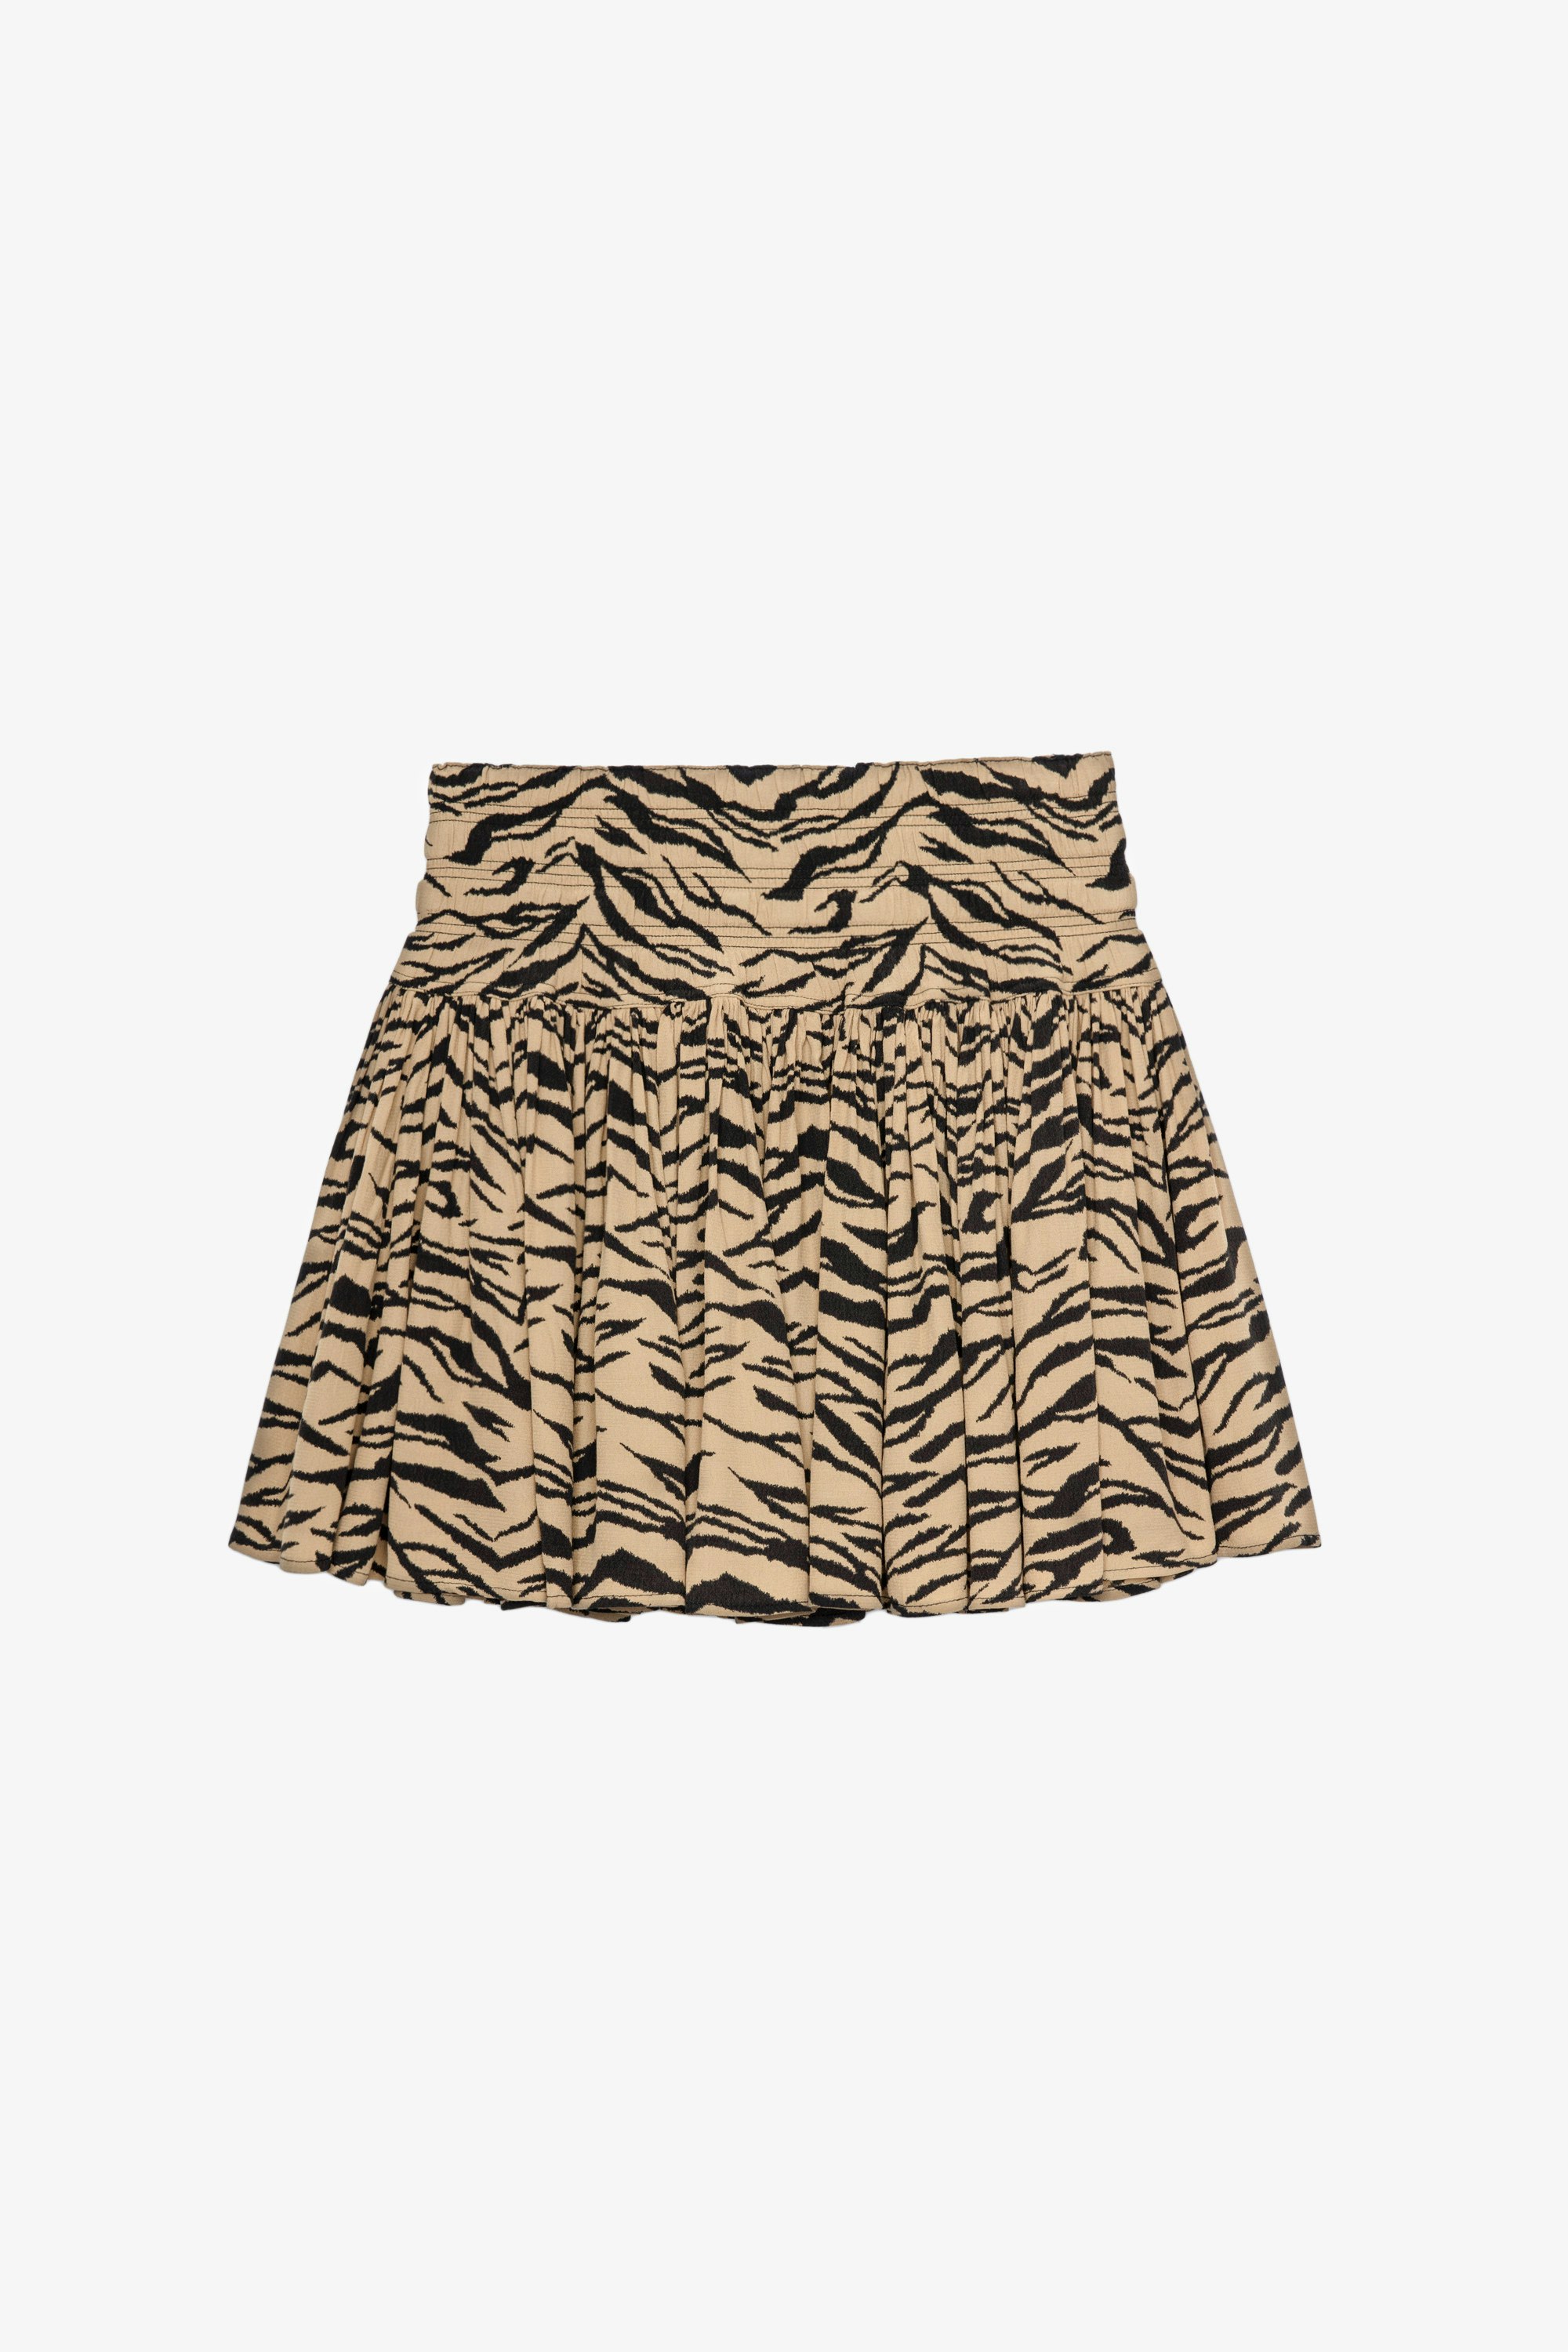 Jocky Tiger スカート Women’s Naturel draped mini skirt with tiger print 